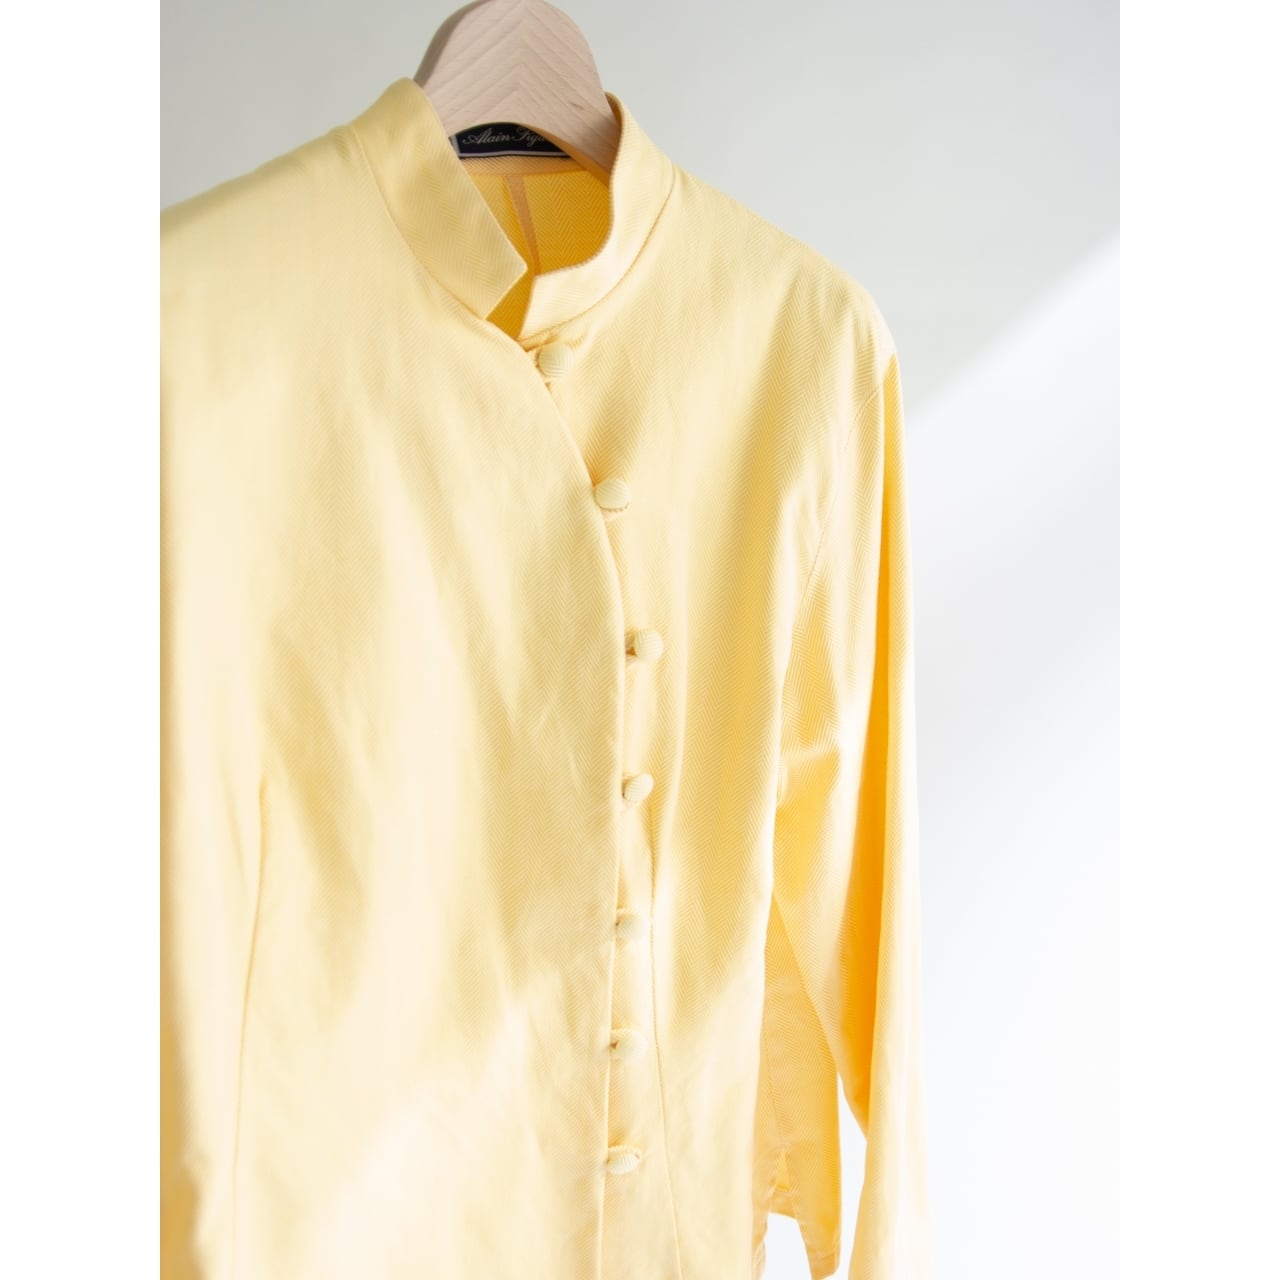 Alain Figaret】Made in France 100% Cotton China Shirt Jacket（アランフィガレ フランス製  ヘリンボーン柄 コットンチャイナシャツジャケット） | MASCOT/E